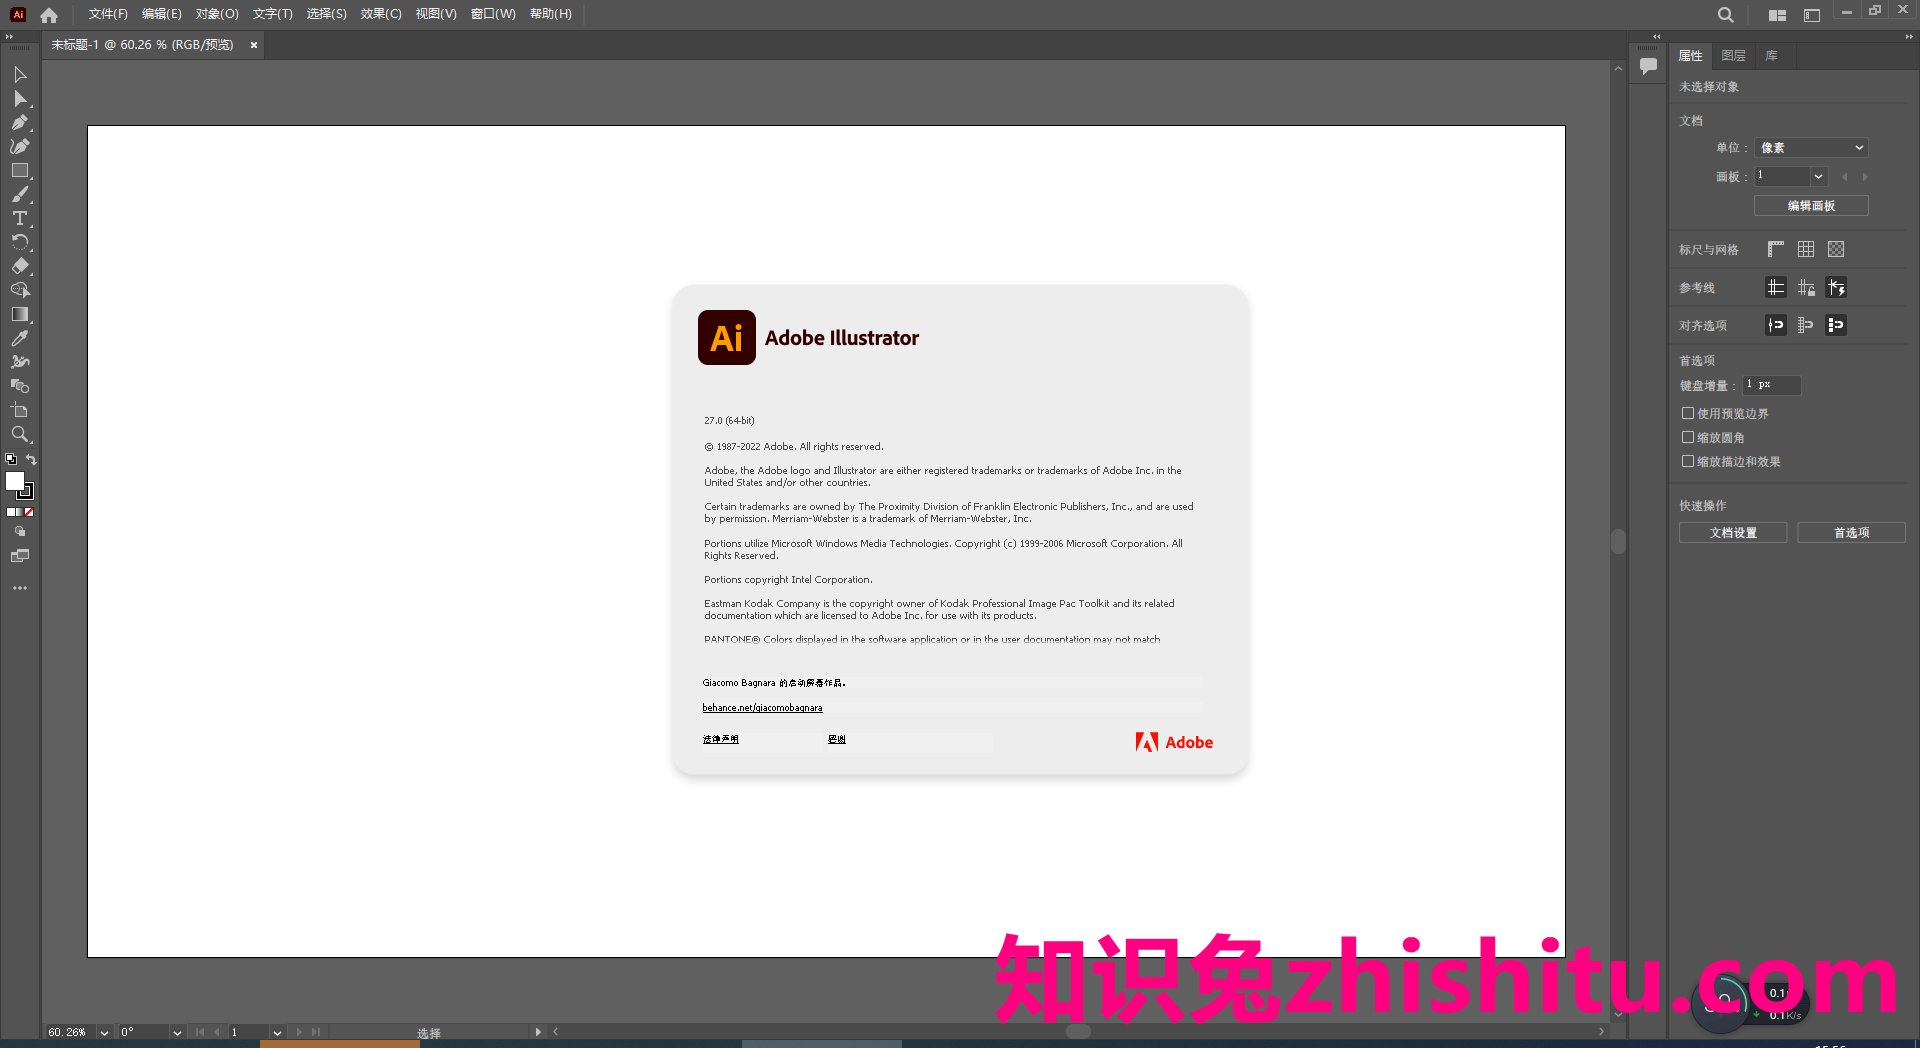 Adobe Illustrator 2023 v27.9.0.80 download the new version for mac